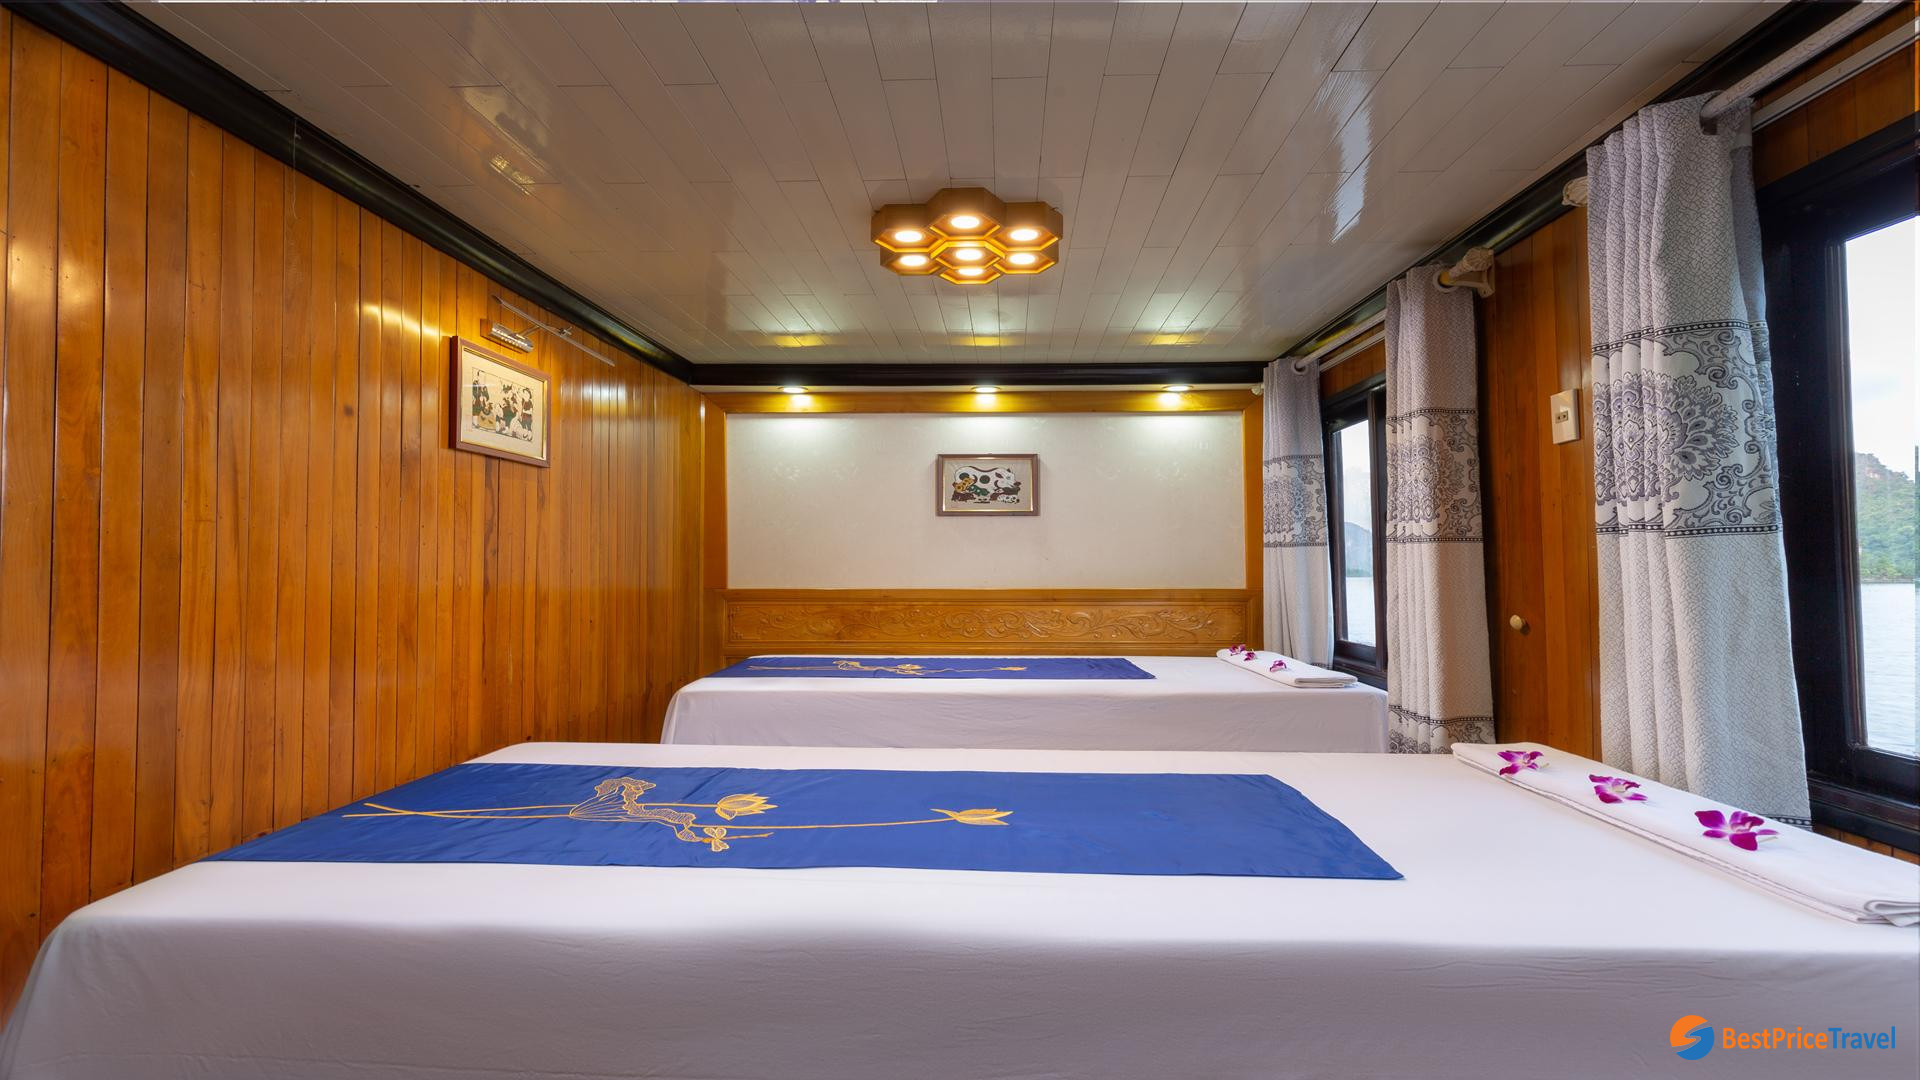 Amazing Sails Luxury Spa Room